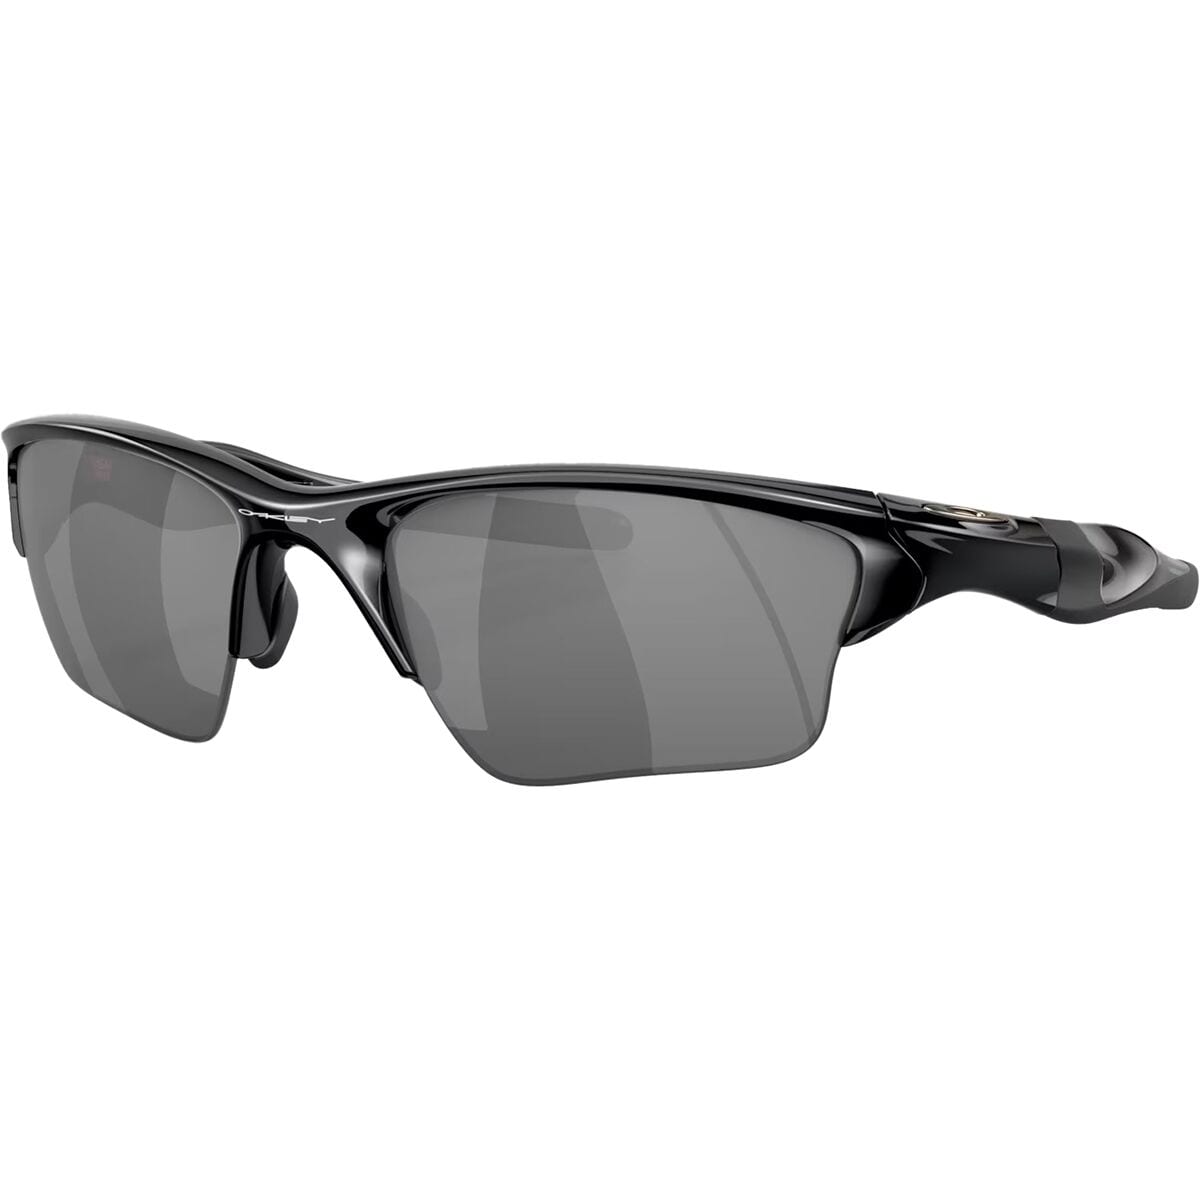 Oakley Half Jacket 2.0 XL Sunglasses Polished Black/Black Iridium, One Size - Men's